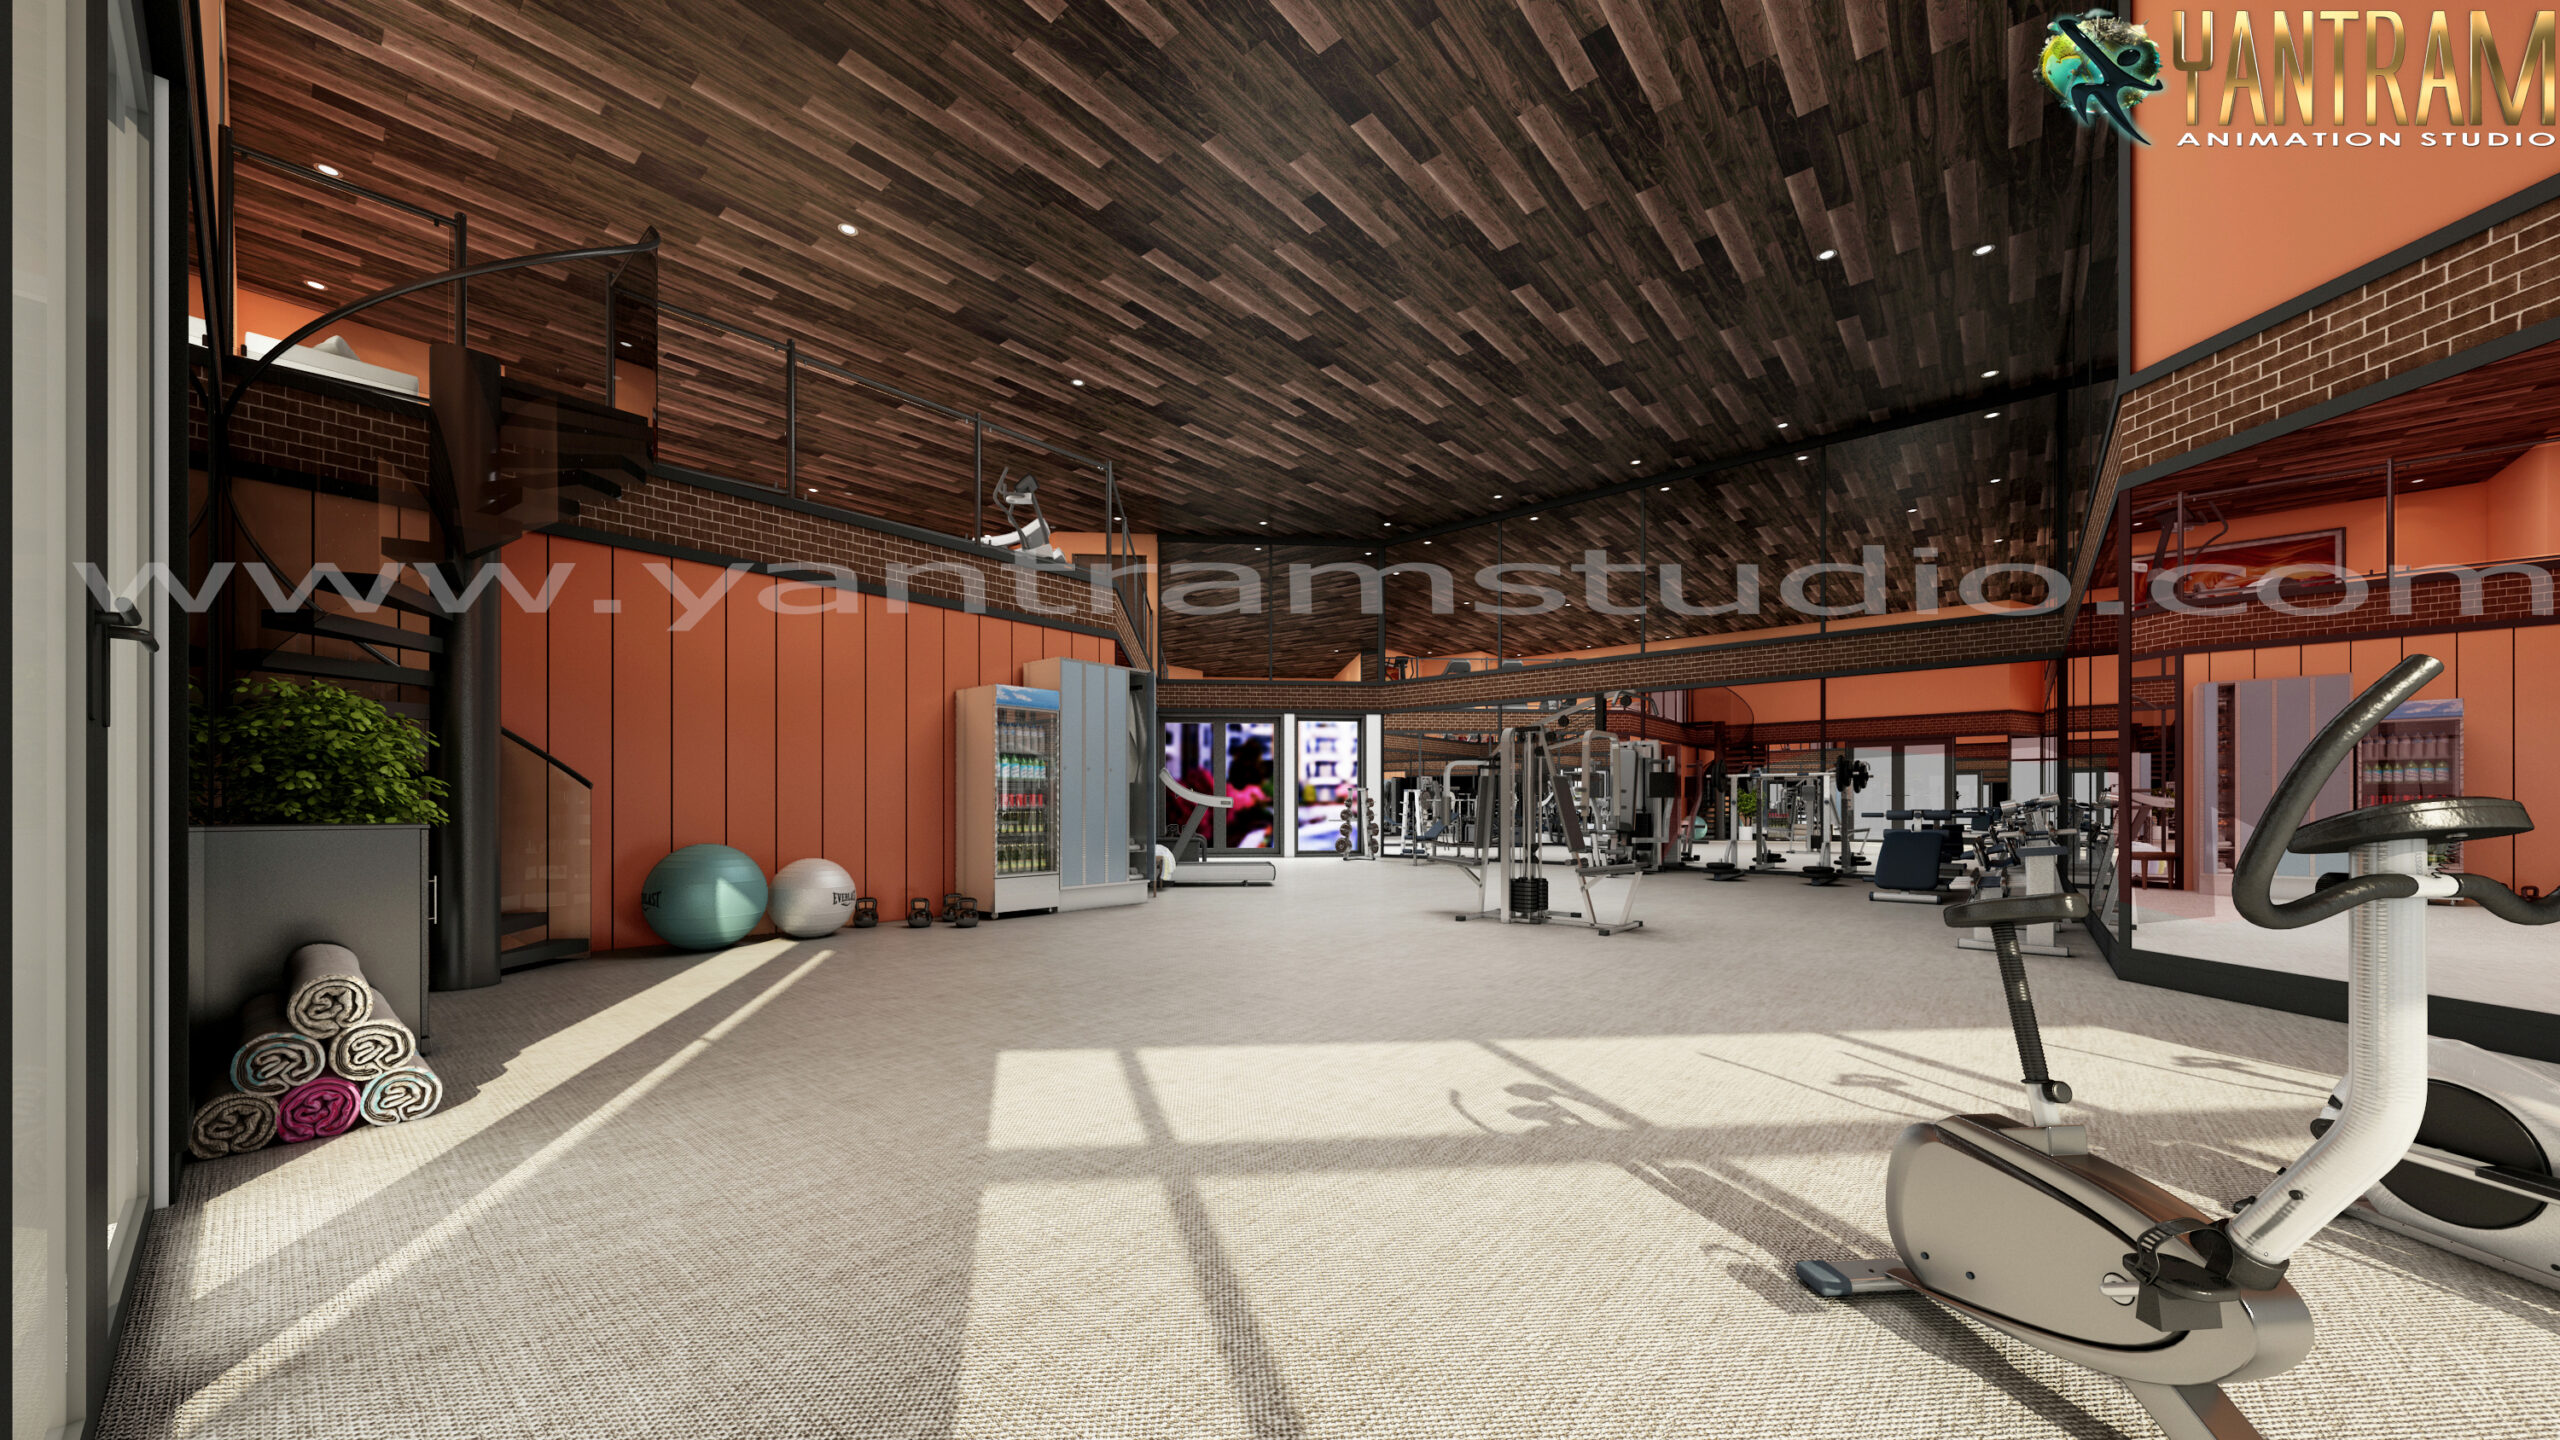 3d interior designers designed Luxurious Gym hall design at Yantram Animation Studio-San Francisco, California